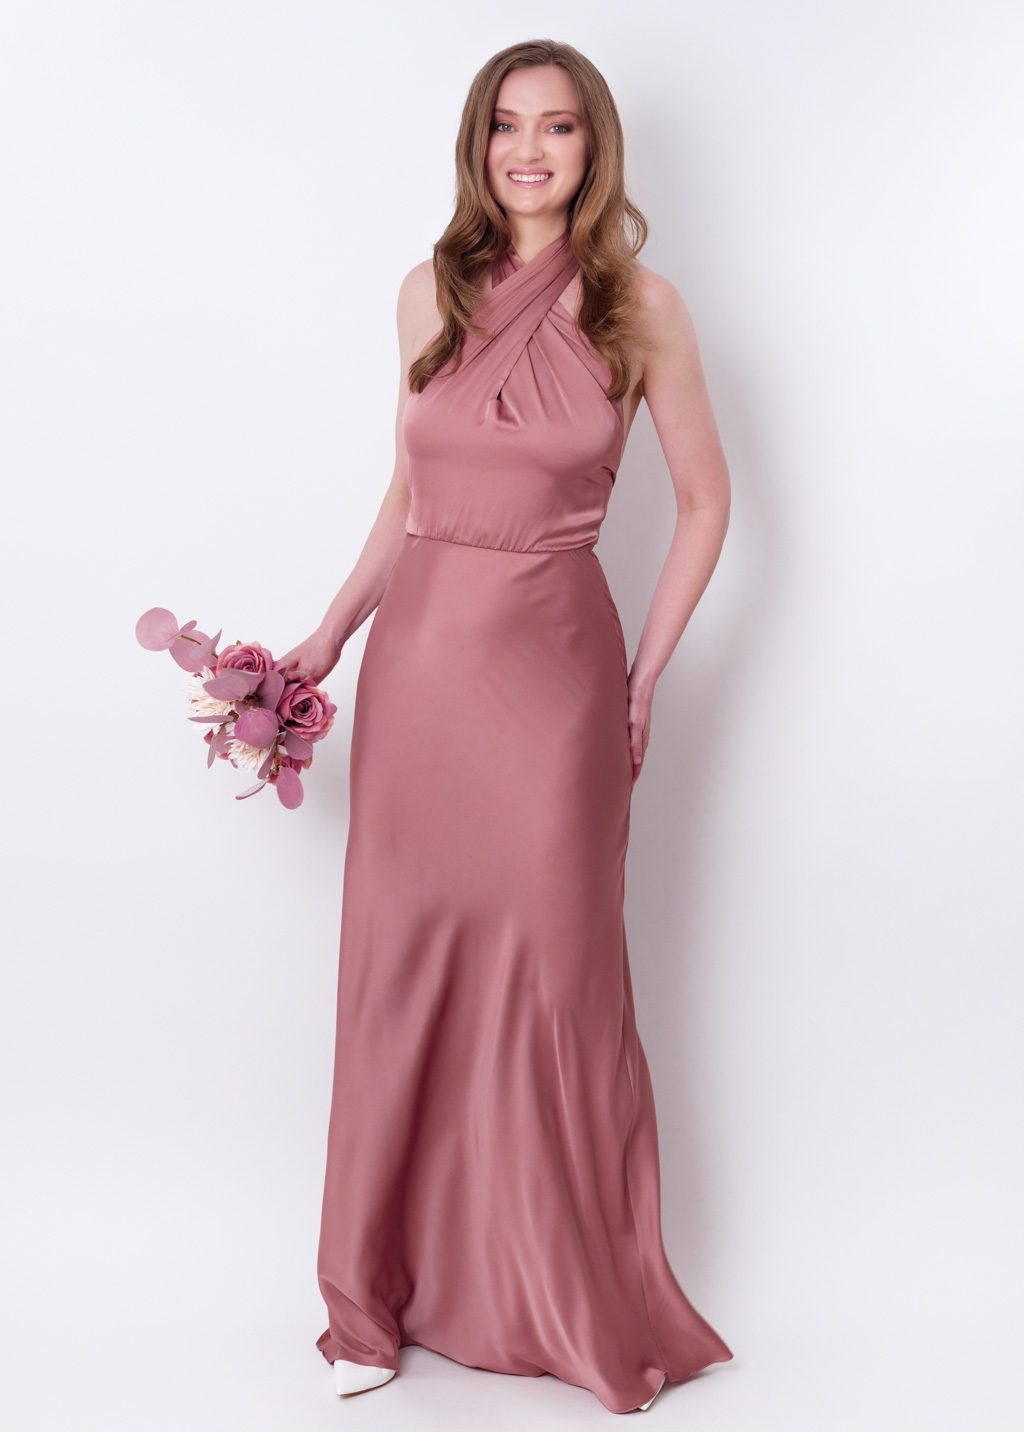 Champagne rose silk long halter dress